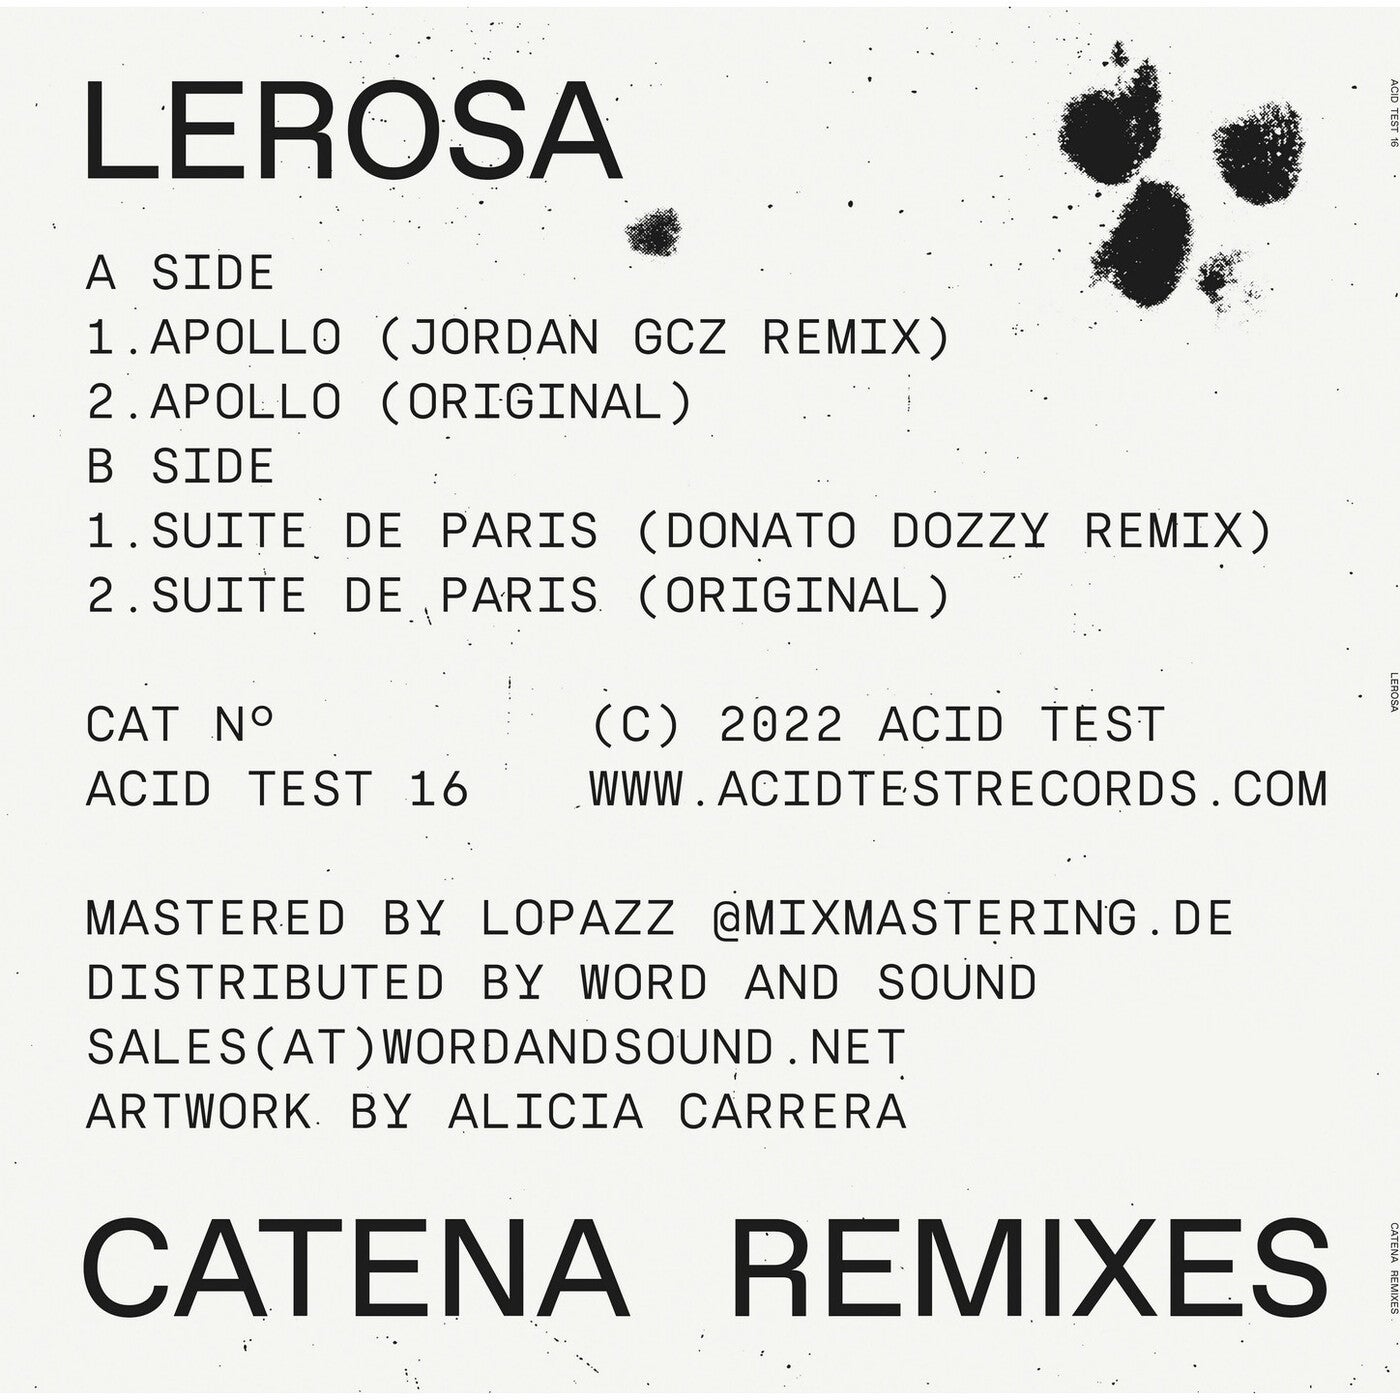 Catena Remixes